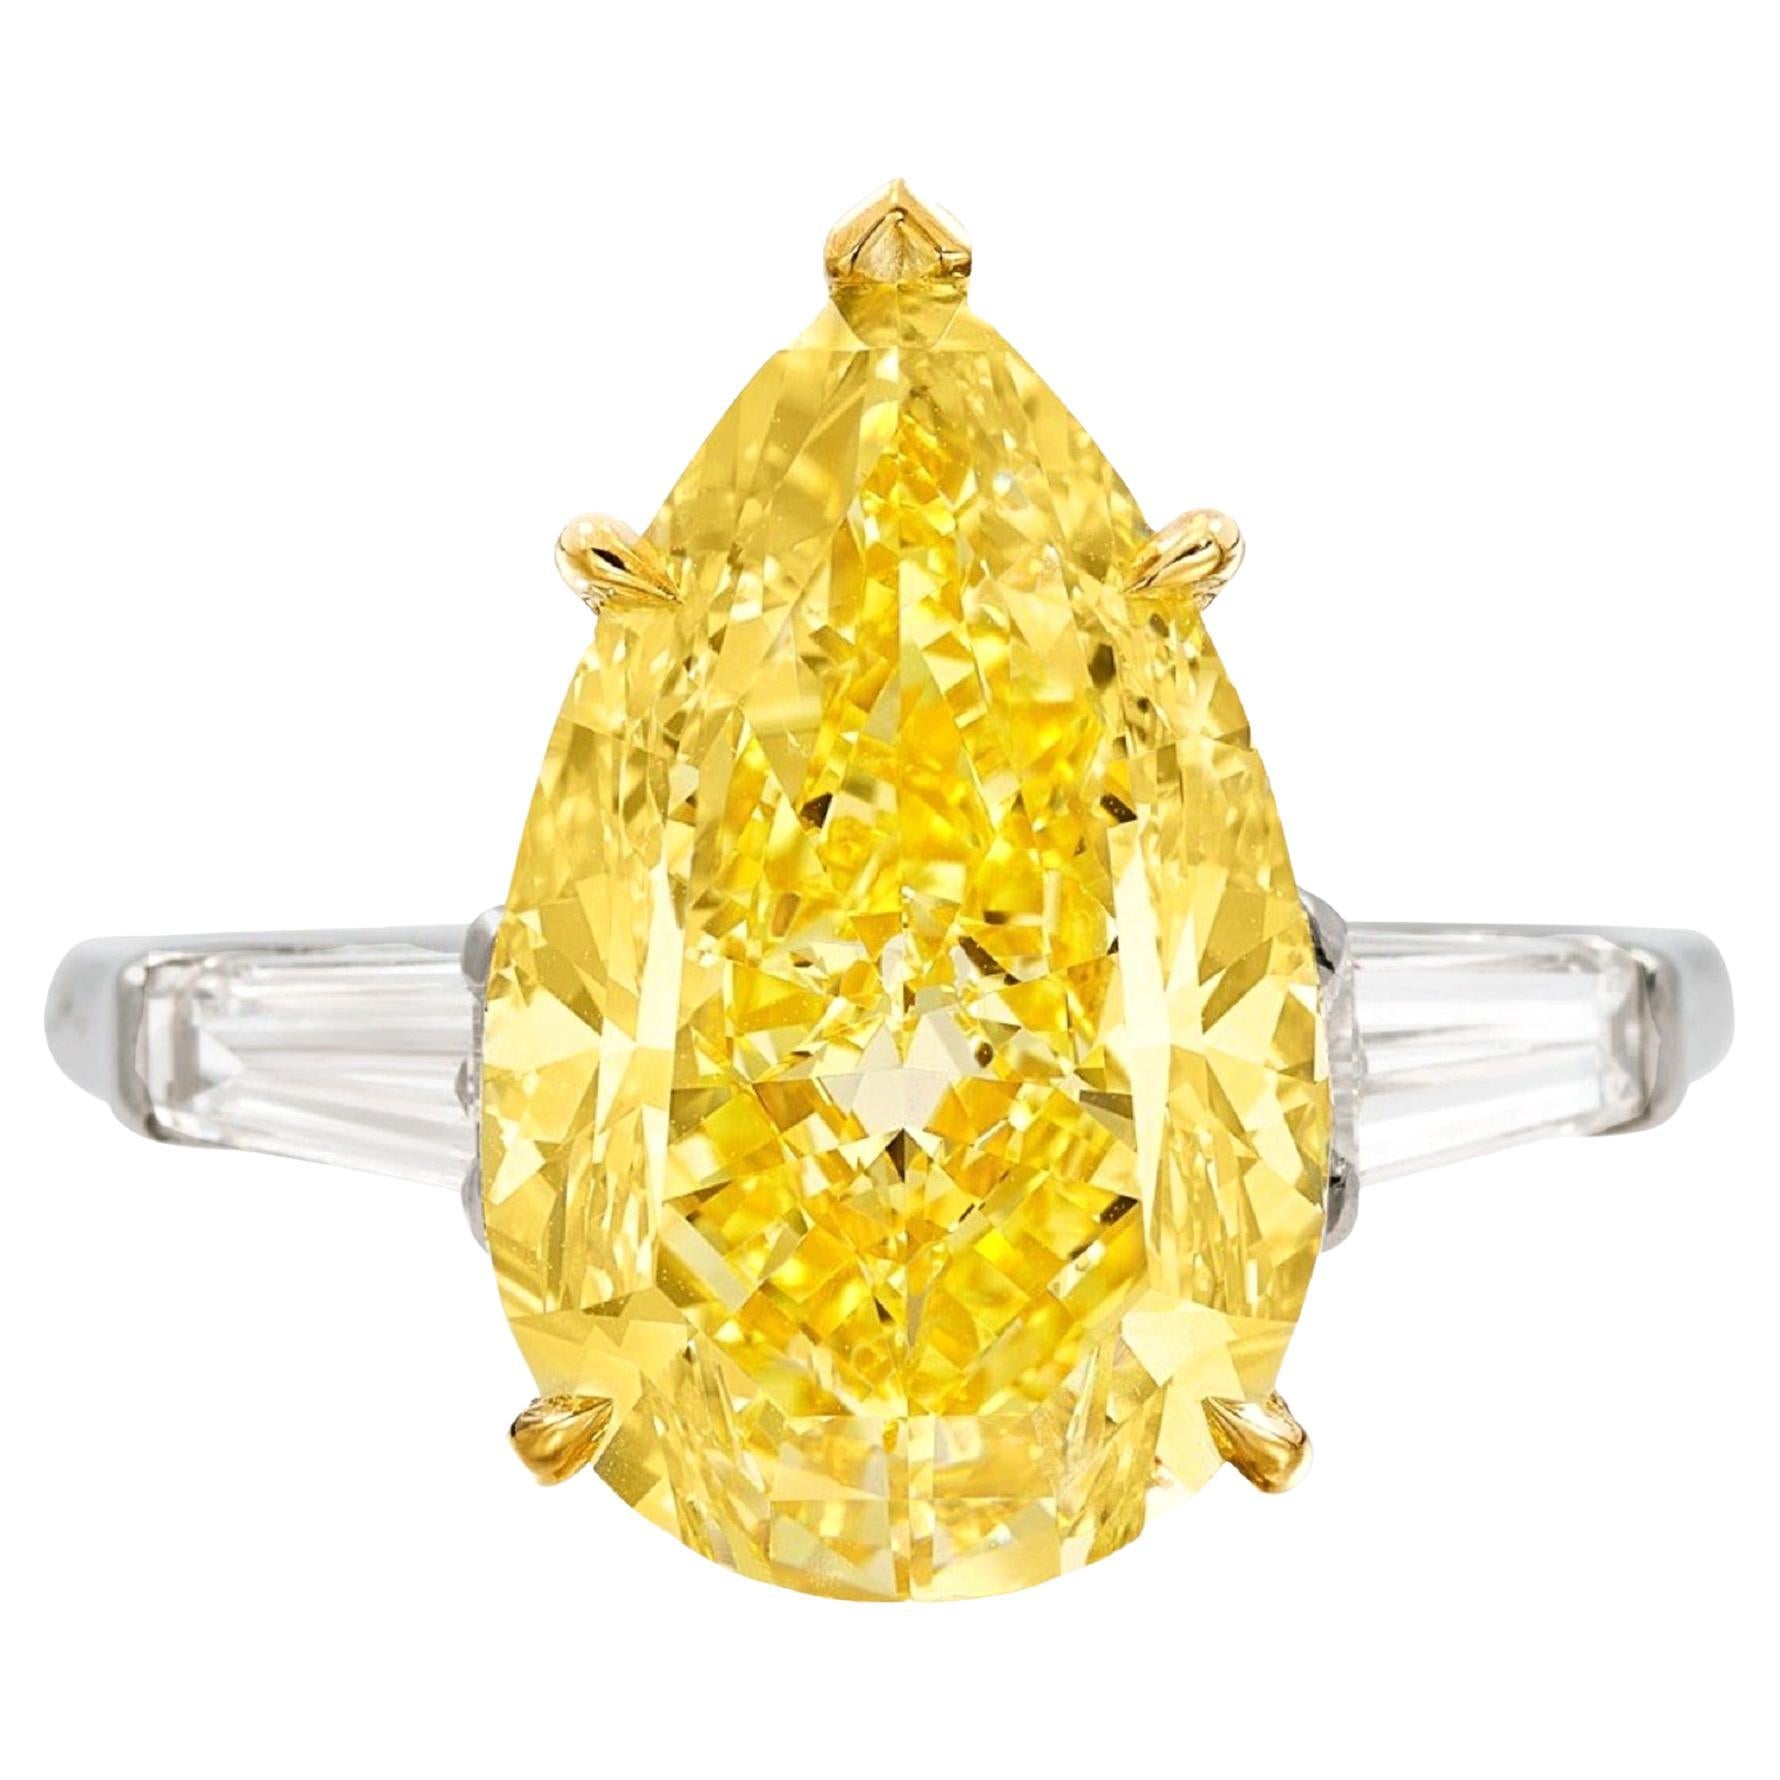 GIA Certified 8.25 Carat Fancy Intense Yellow Diamond Solitaire Ring